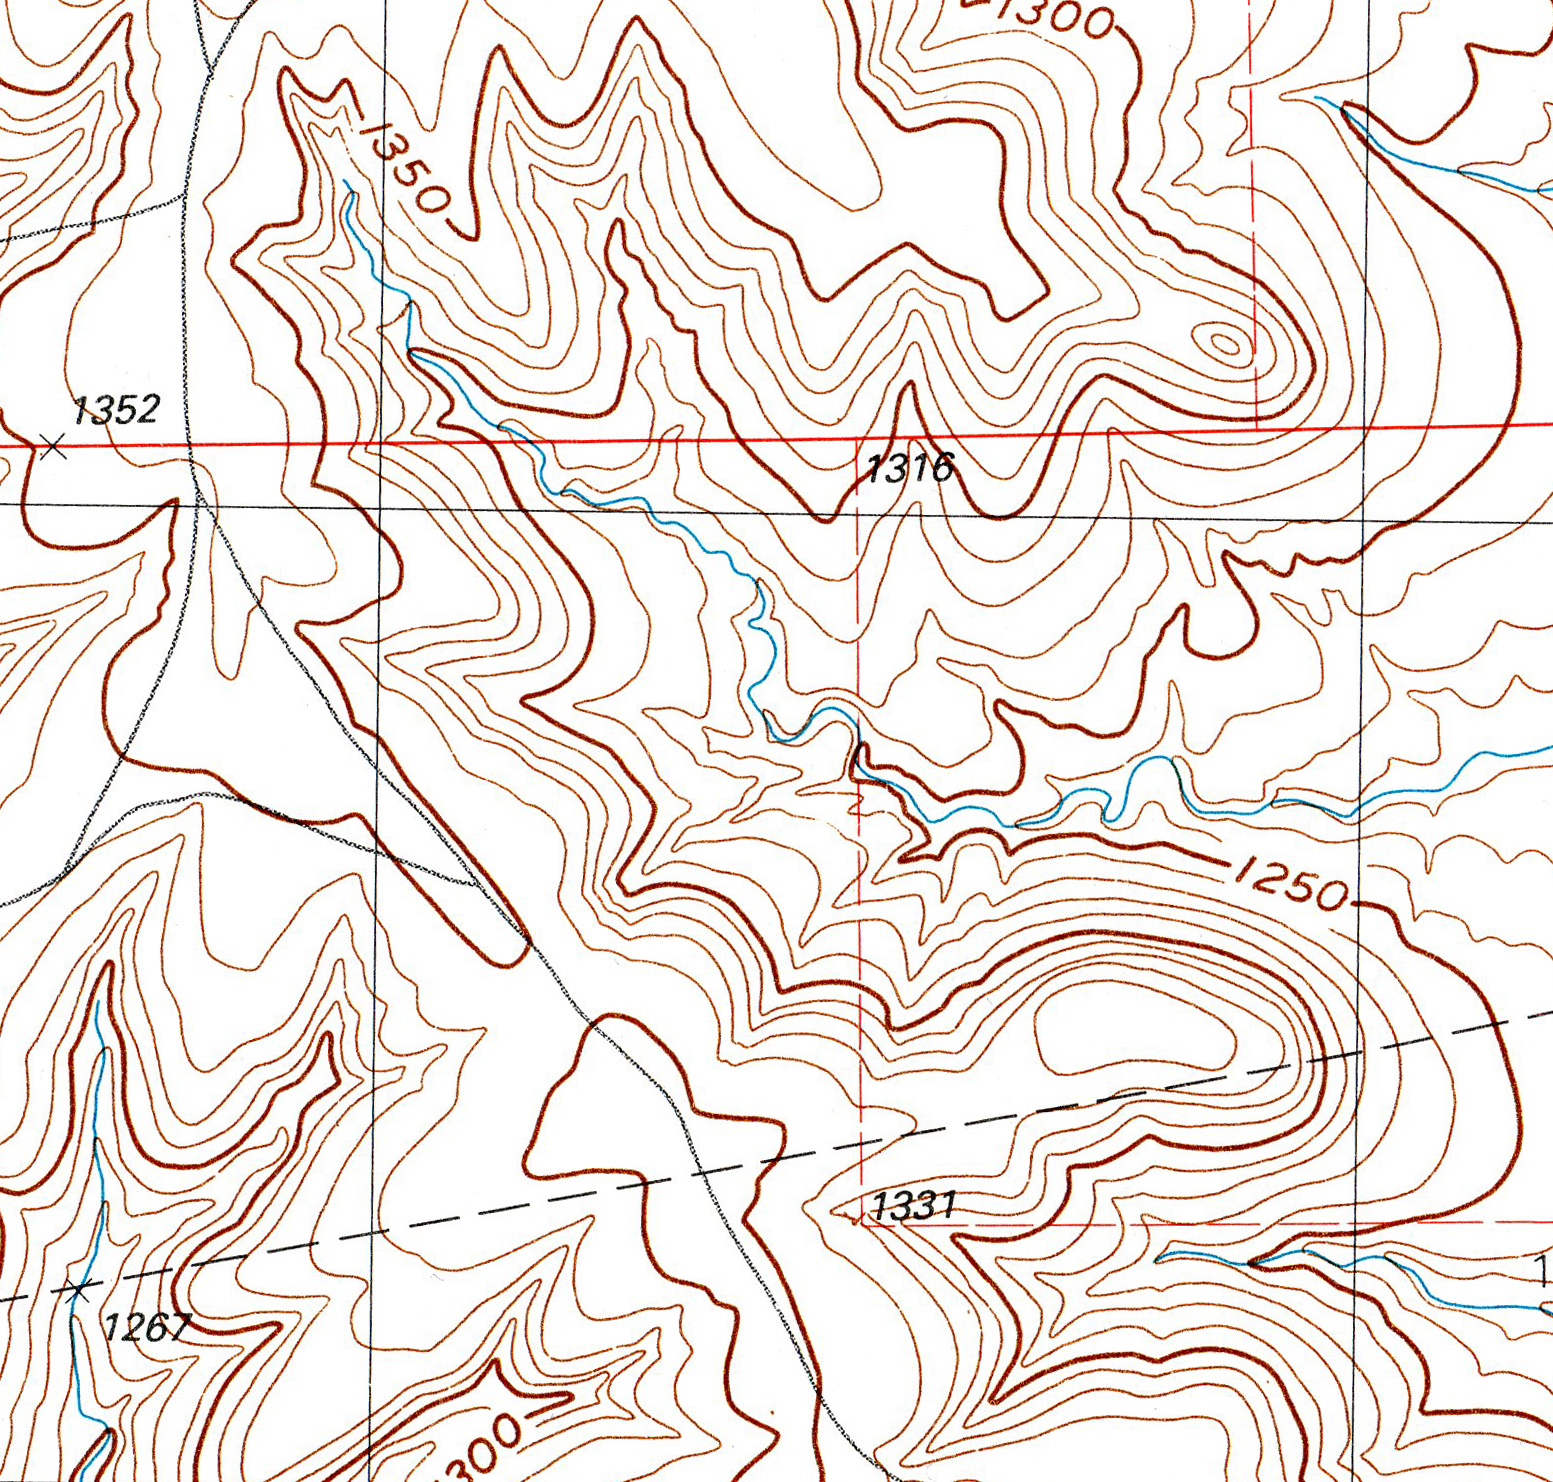 Sample topographic map